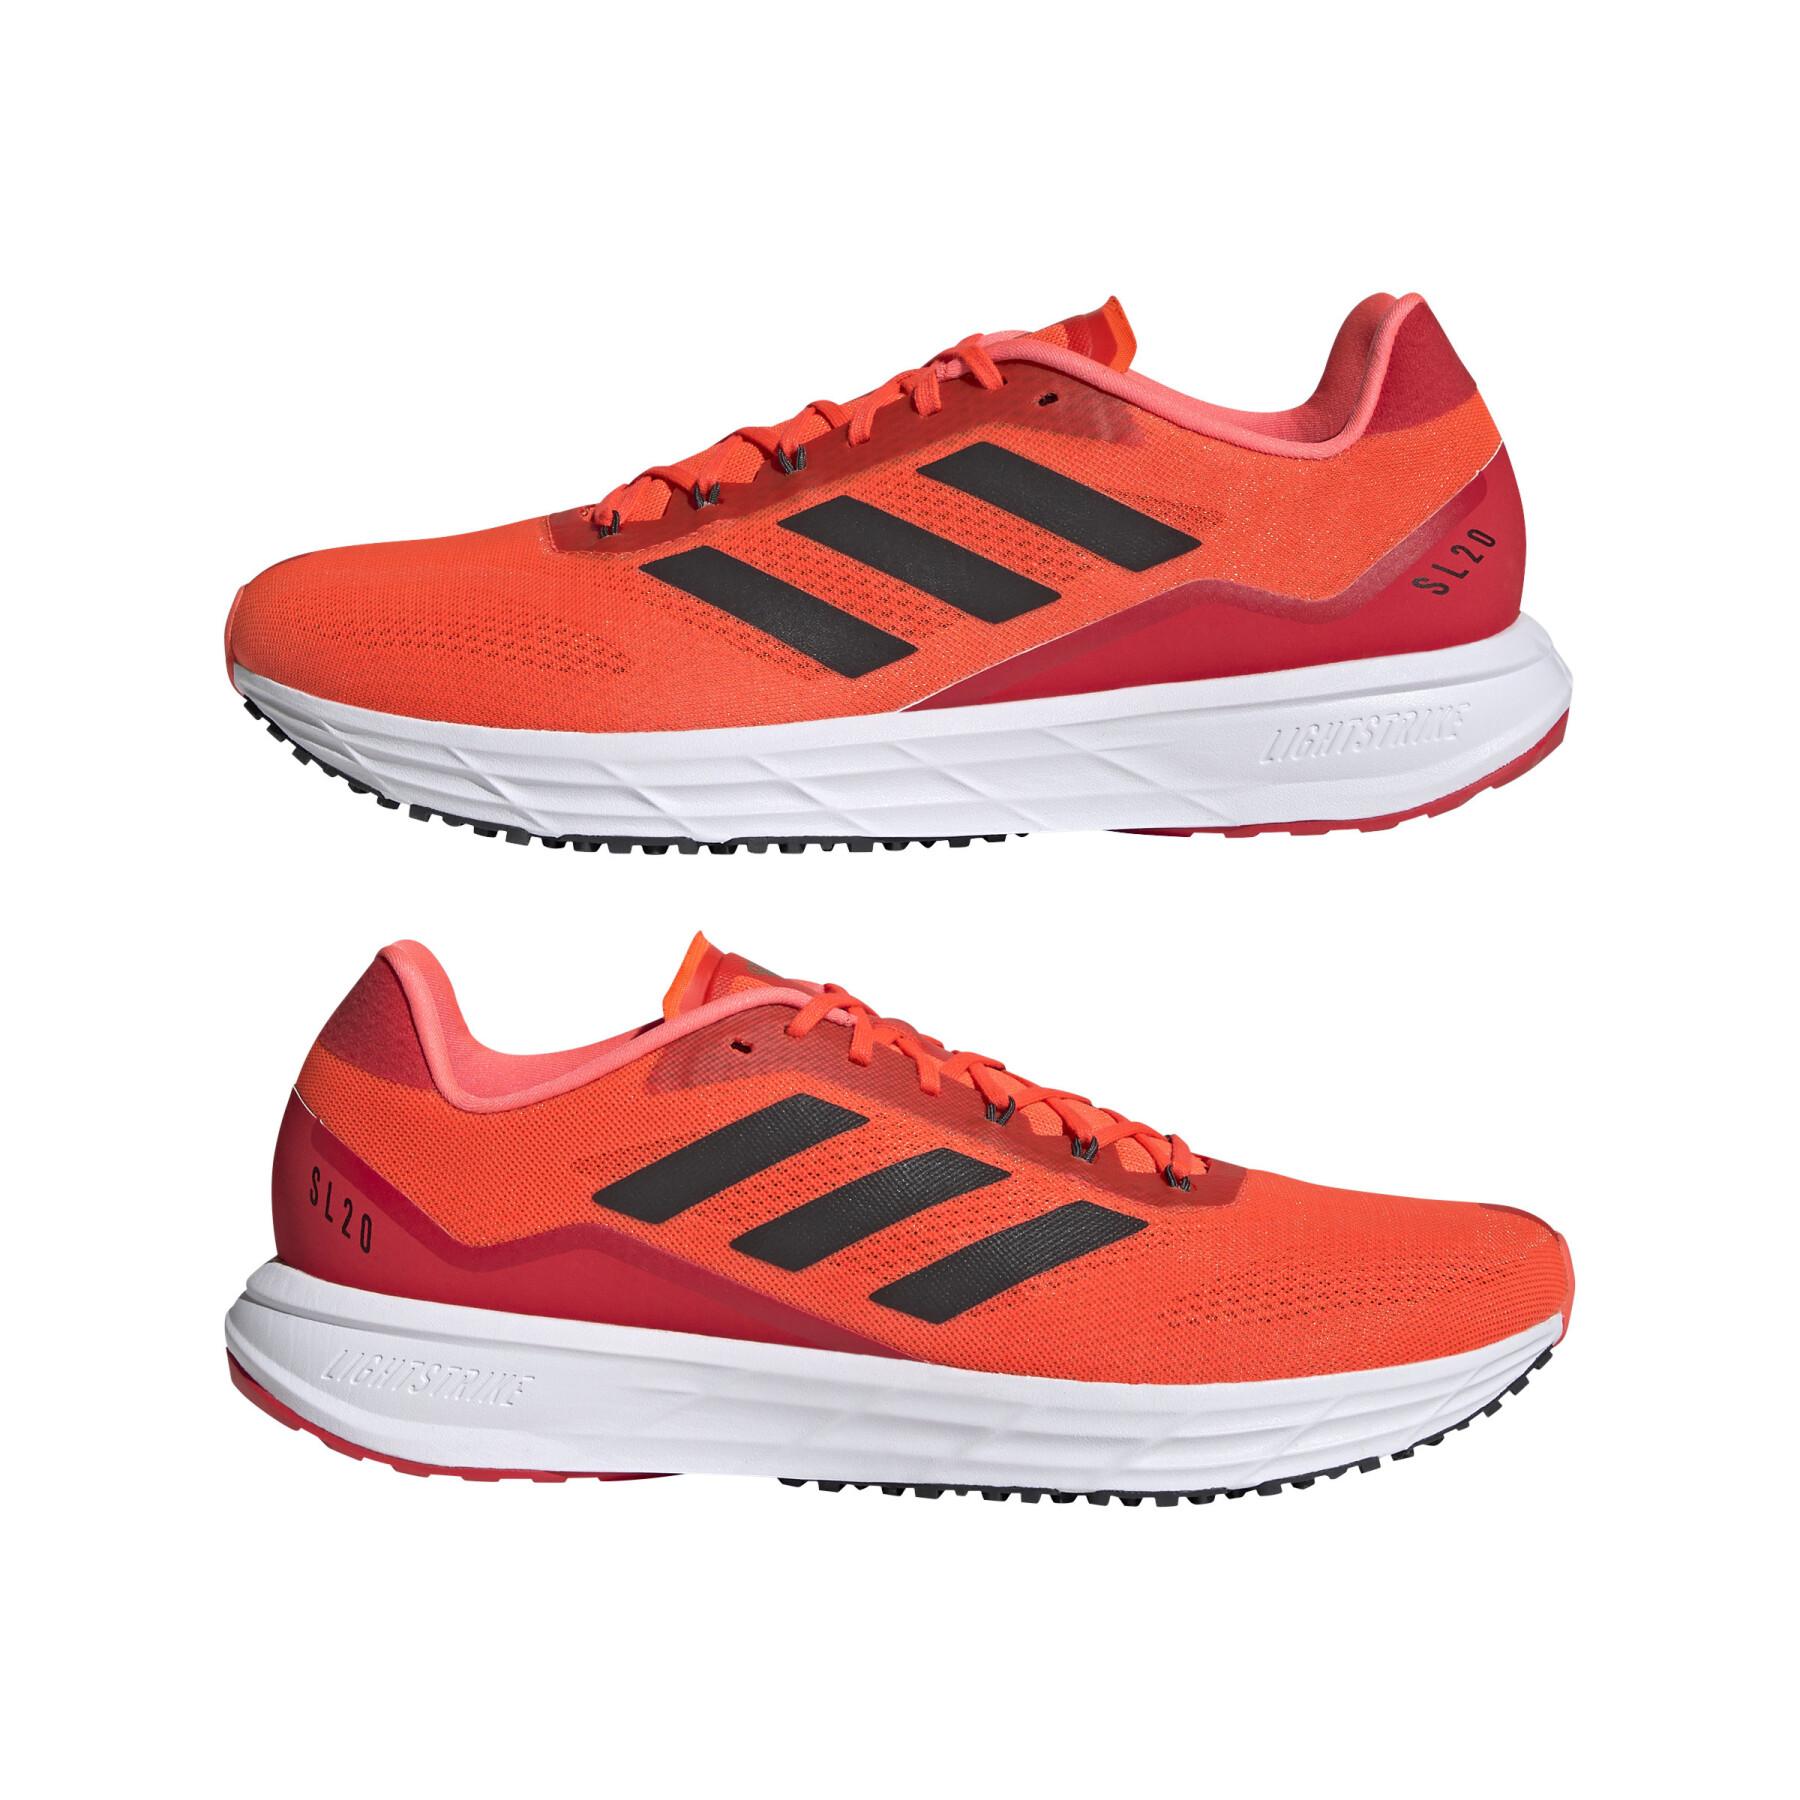 Chaussures de running adidas SL20.2